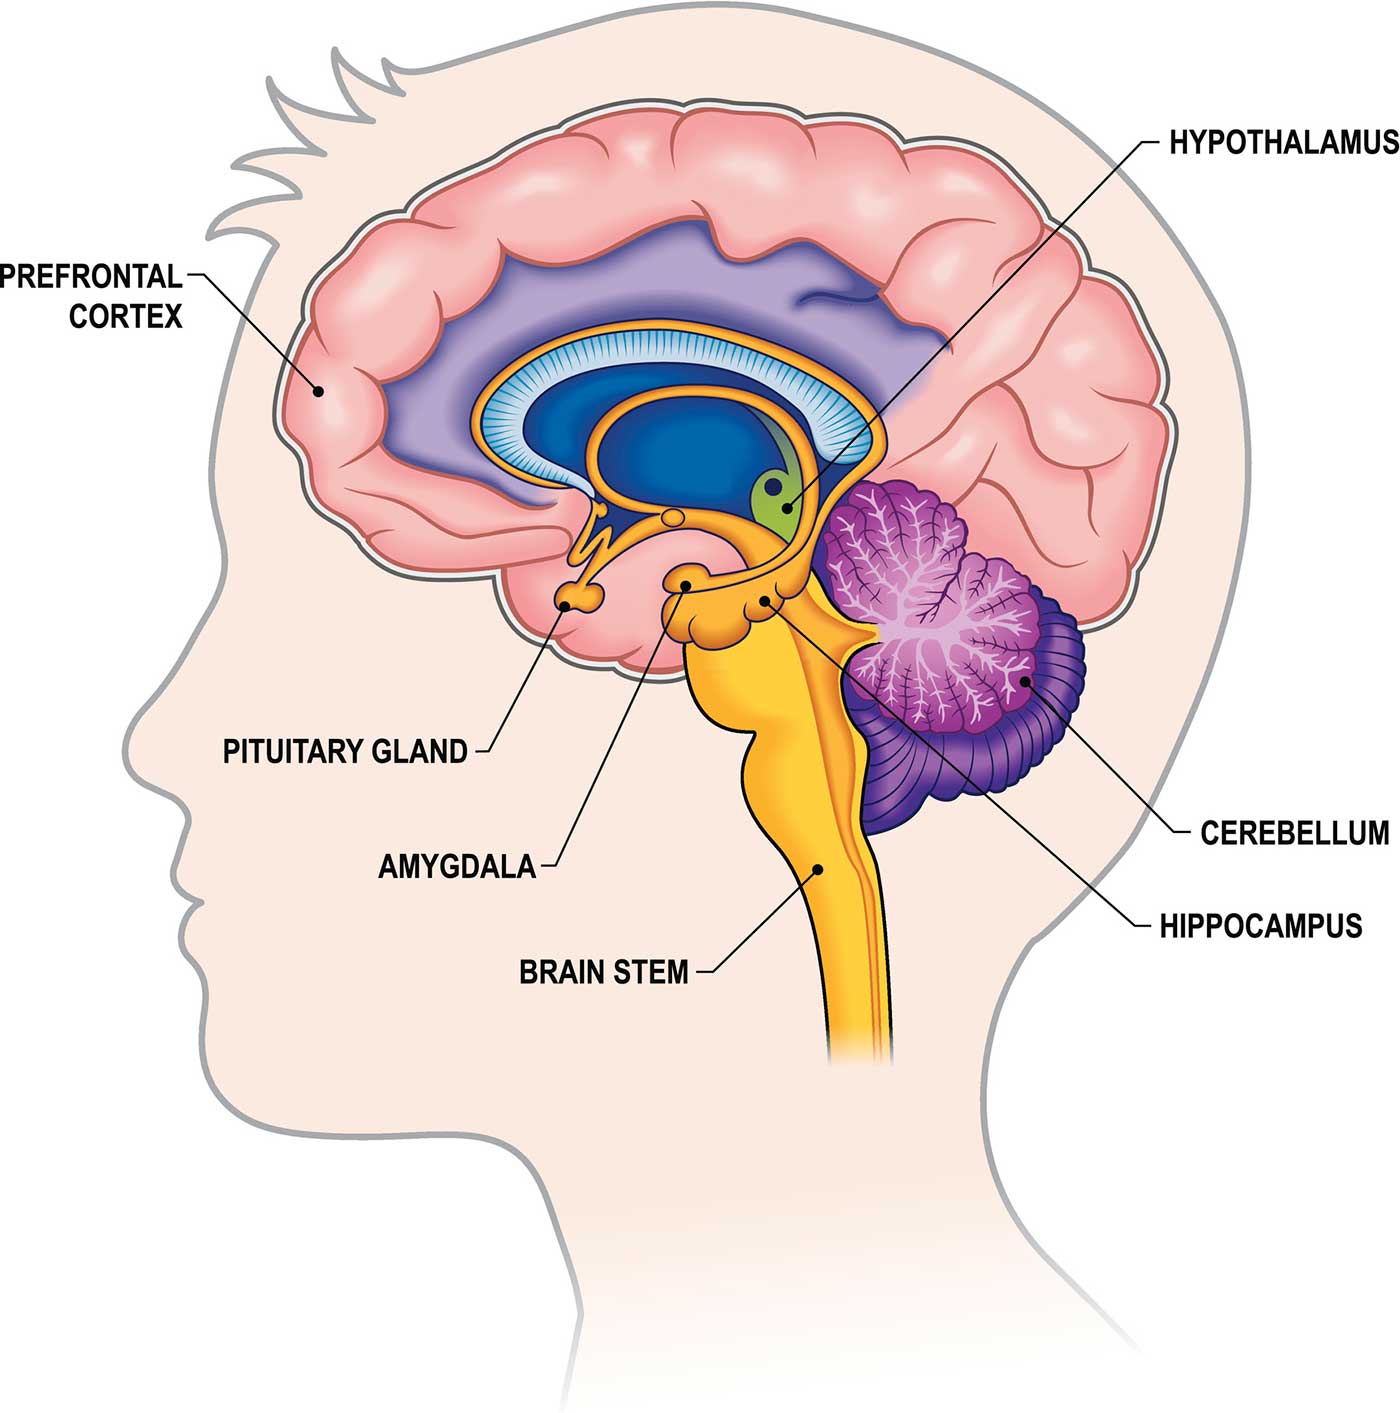 parts of the brain presentation